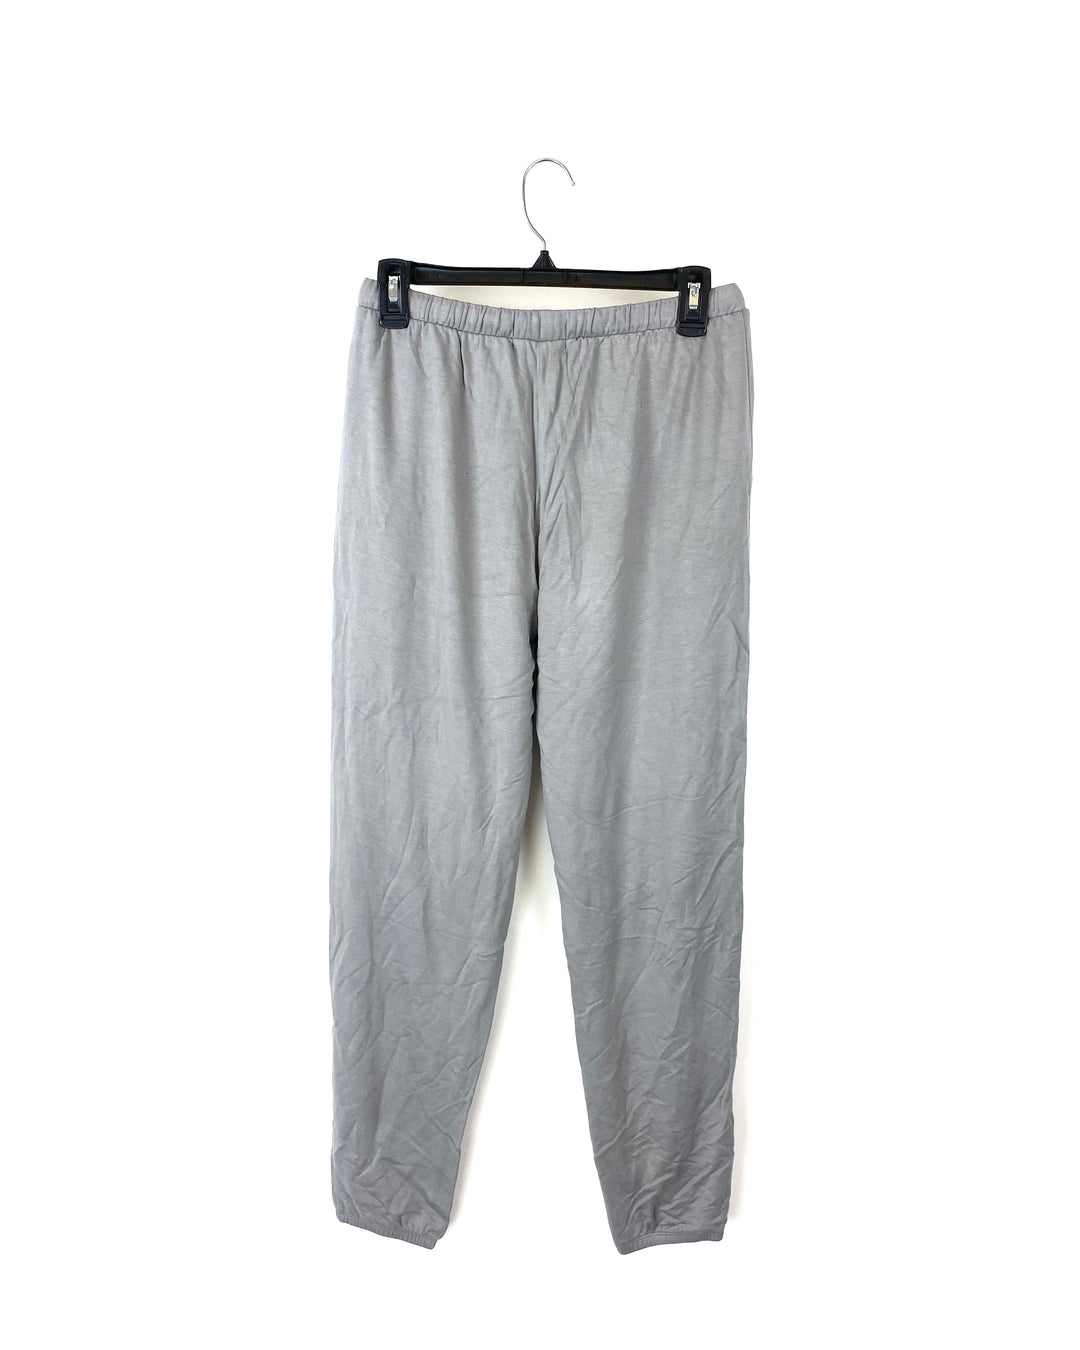 Light Grey Lounge Pants - Small